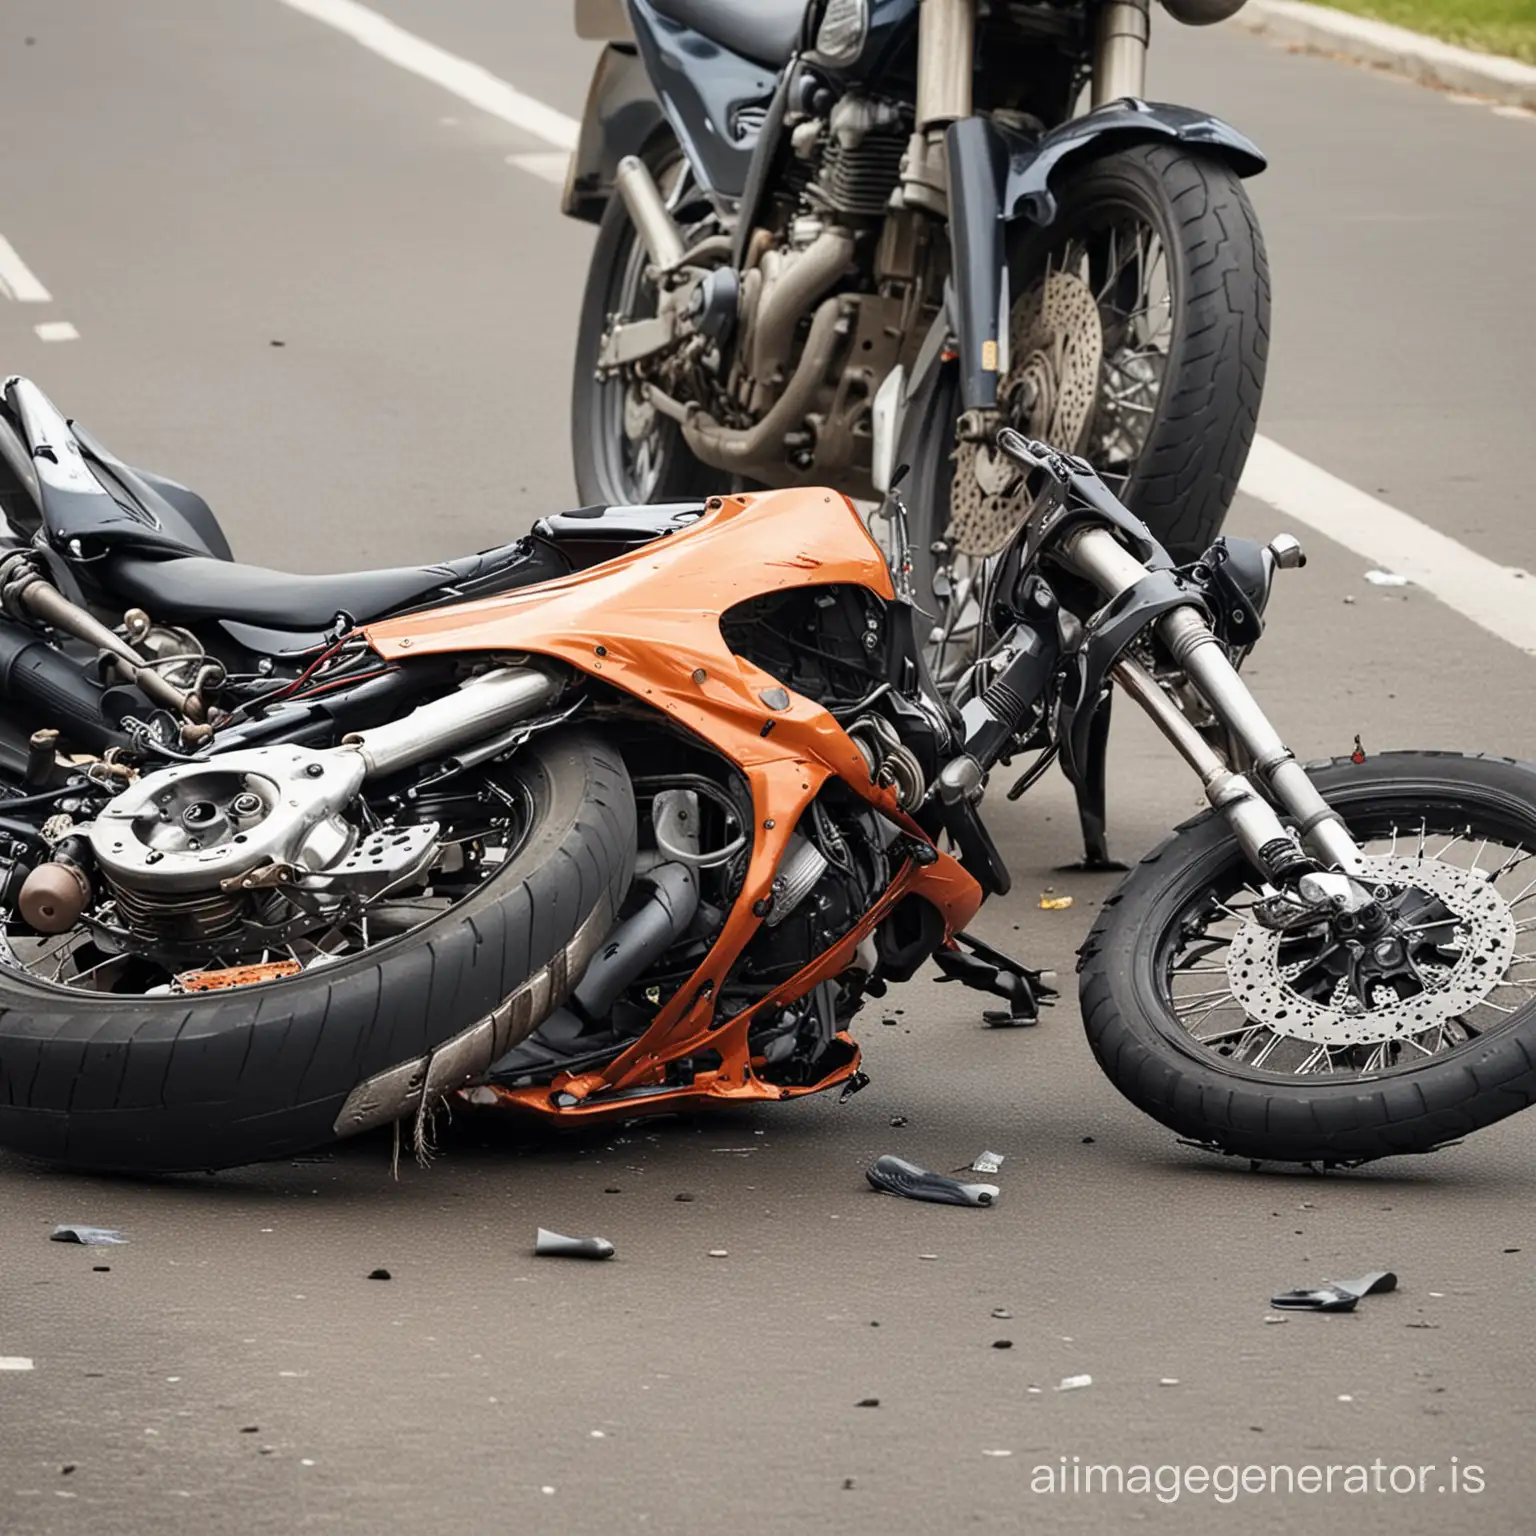 Motor bike accident